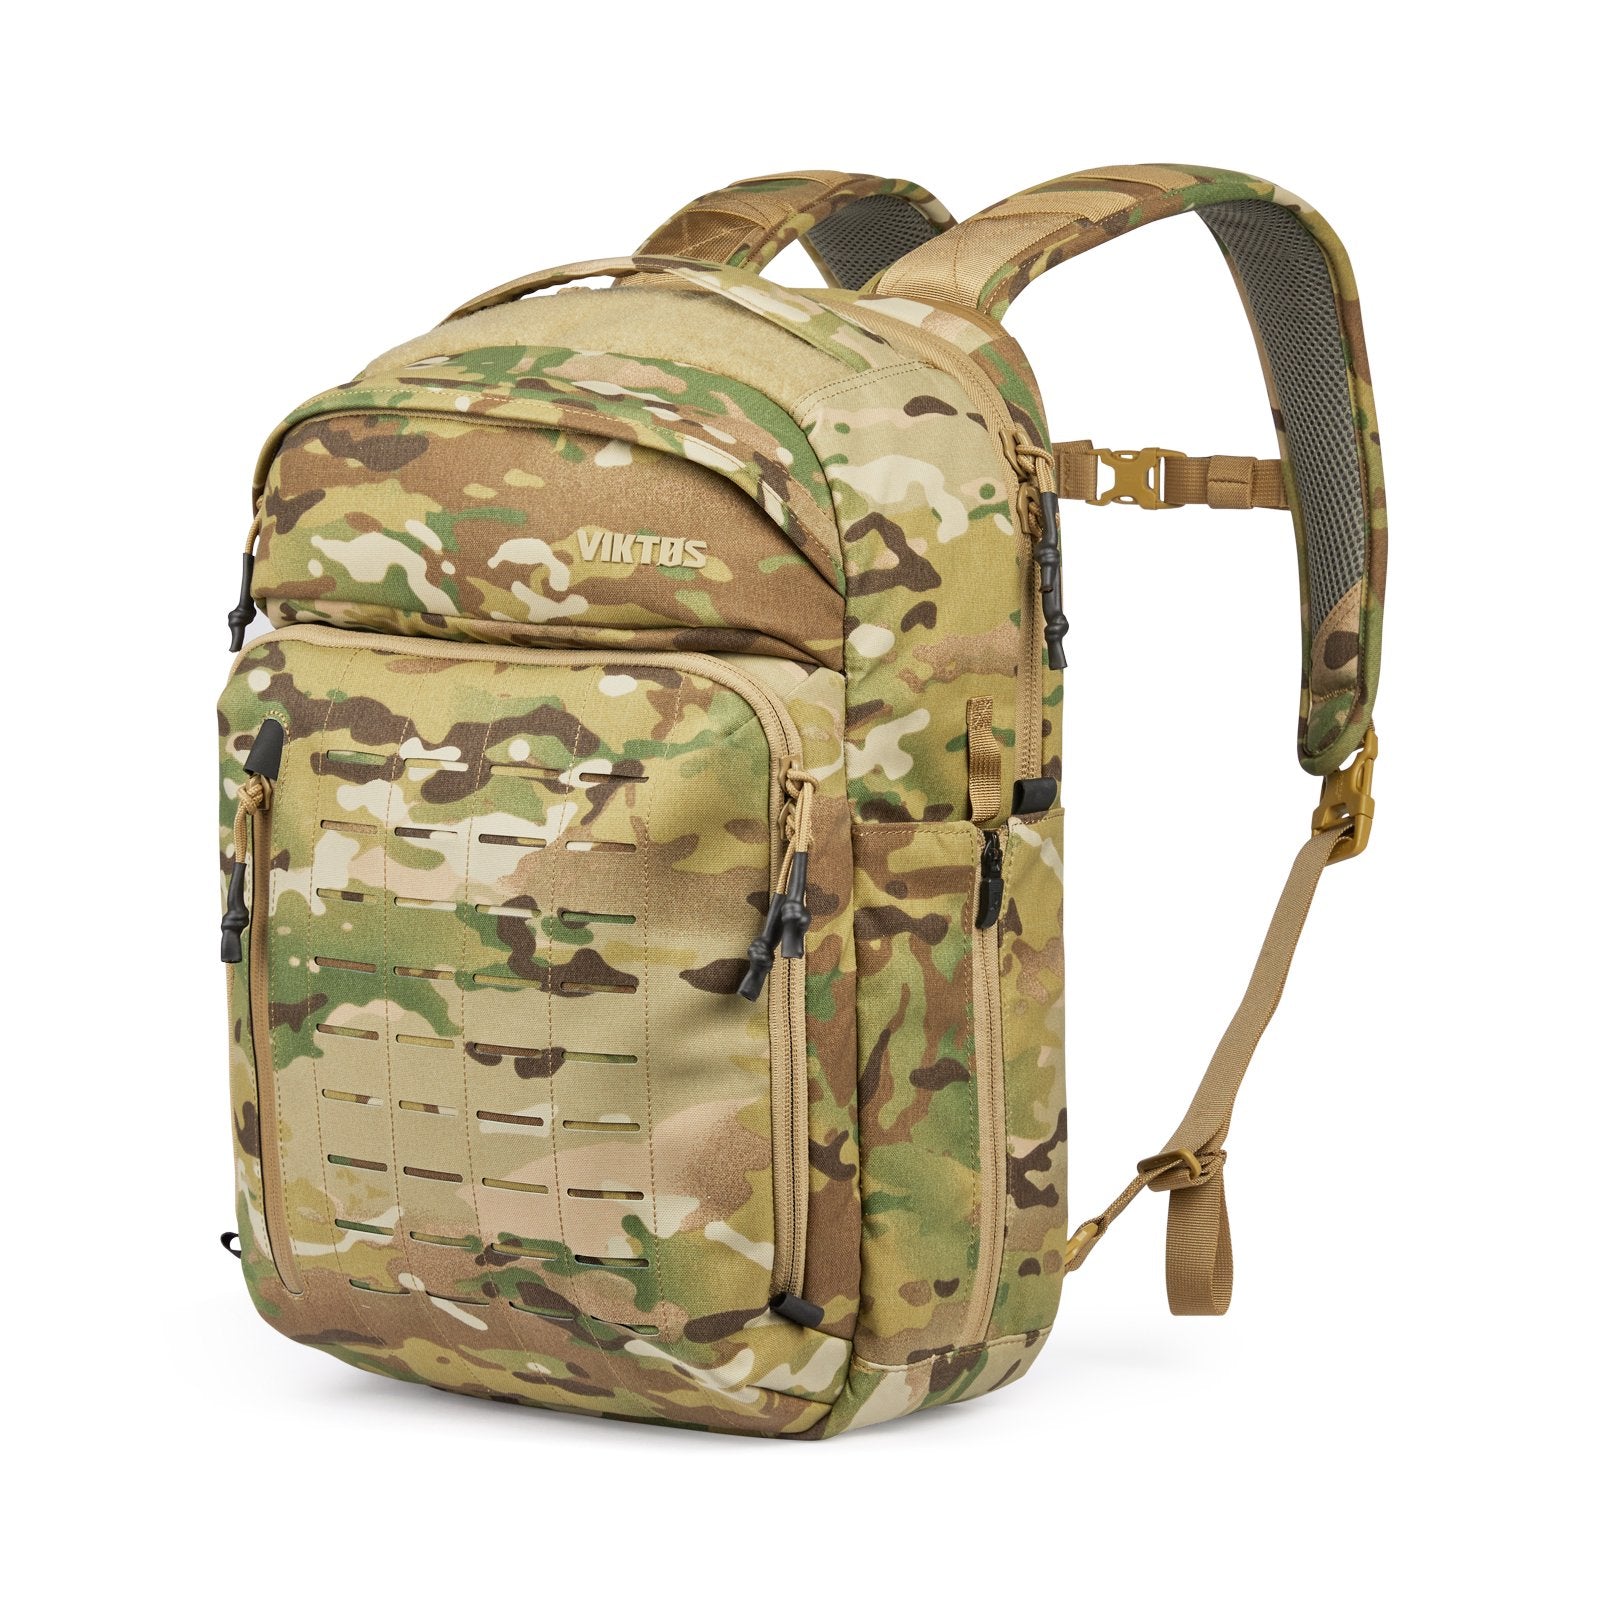 VIKTOS Perimeter 25L Backpack MultiCam Bags, Packs and Cases VIKTOS Tactical Gear Supplier Tactical Distributors Australia